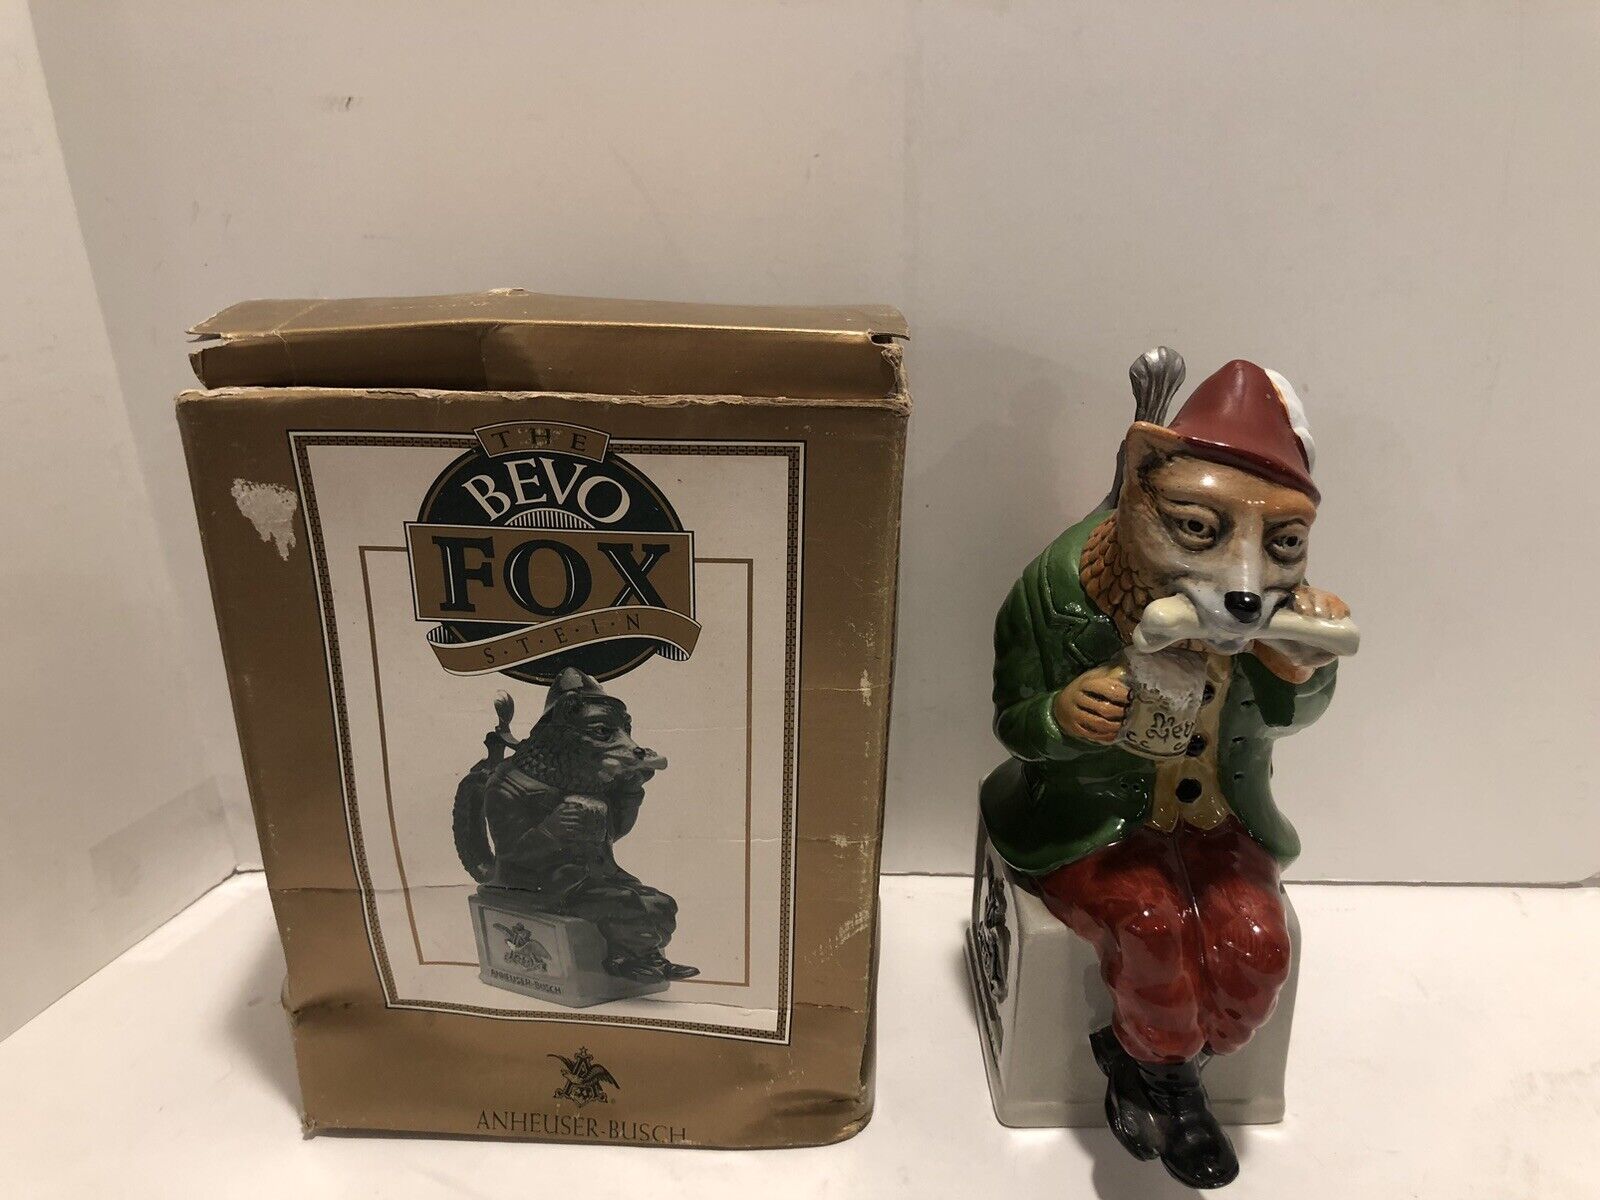 NEW VTG 1991 ANHEUSER BUSCH BEVO FOX STEIN THEWALT GERMANY CERAMIC W/BOX